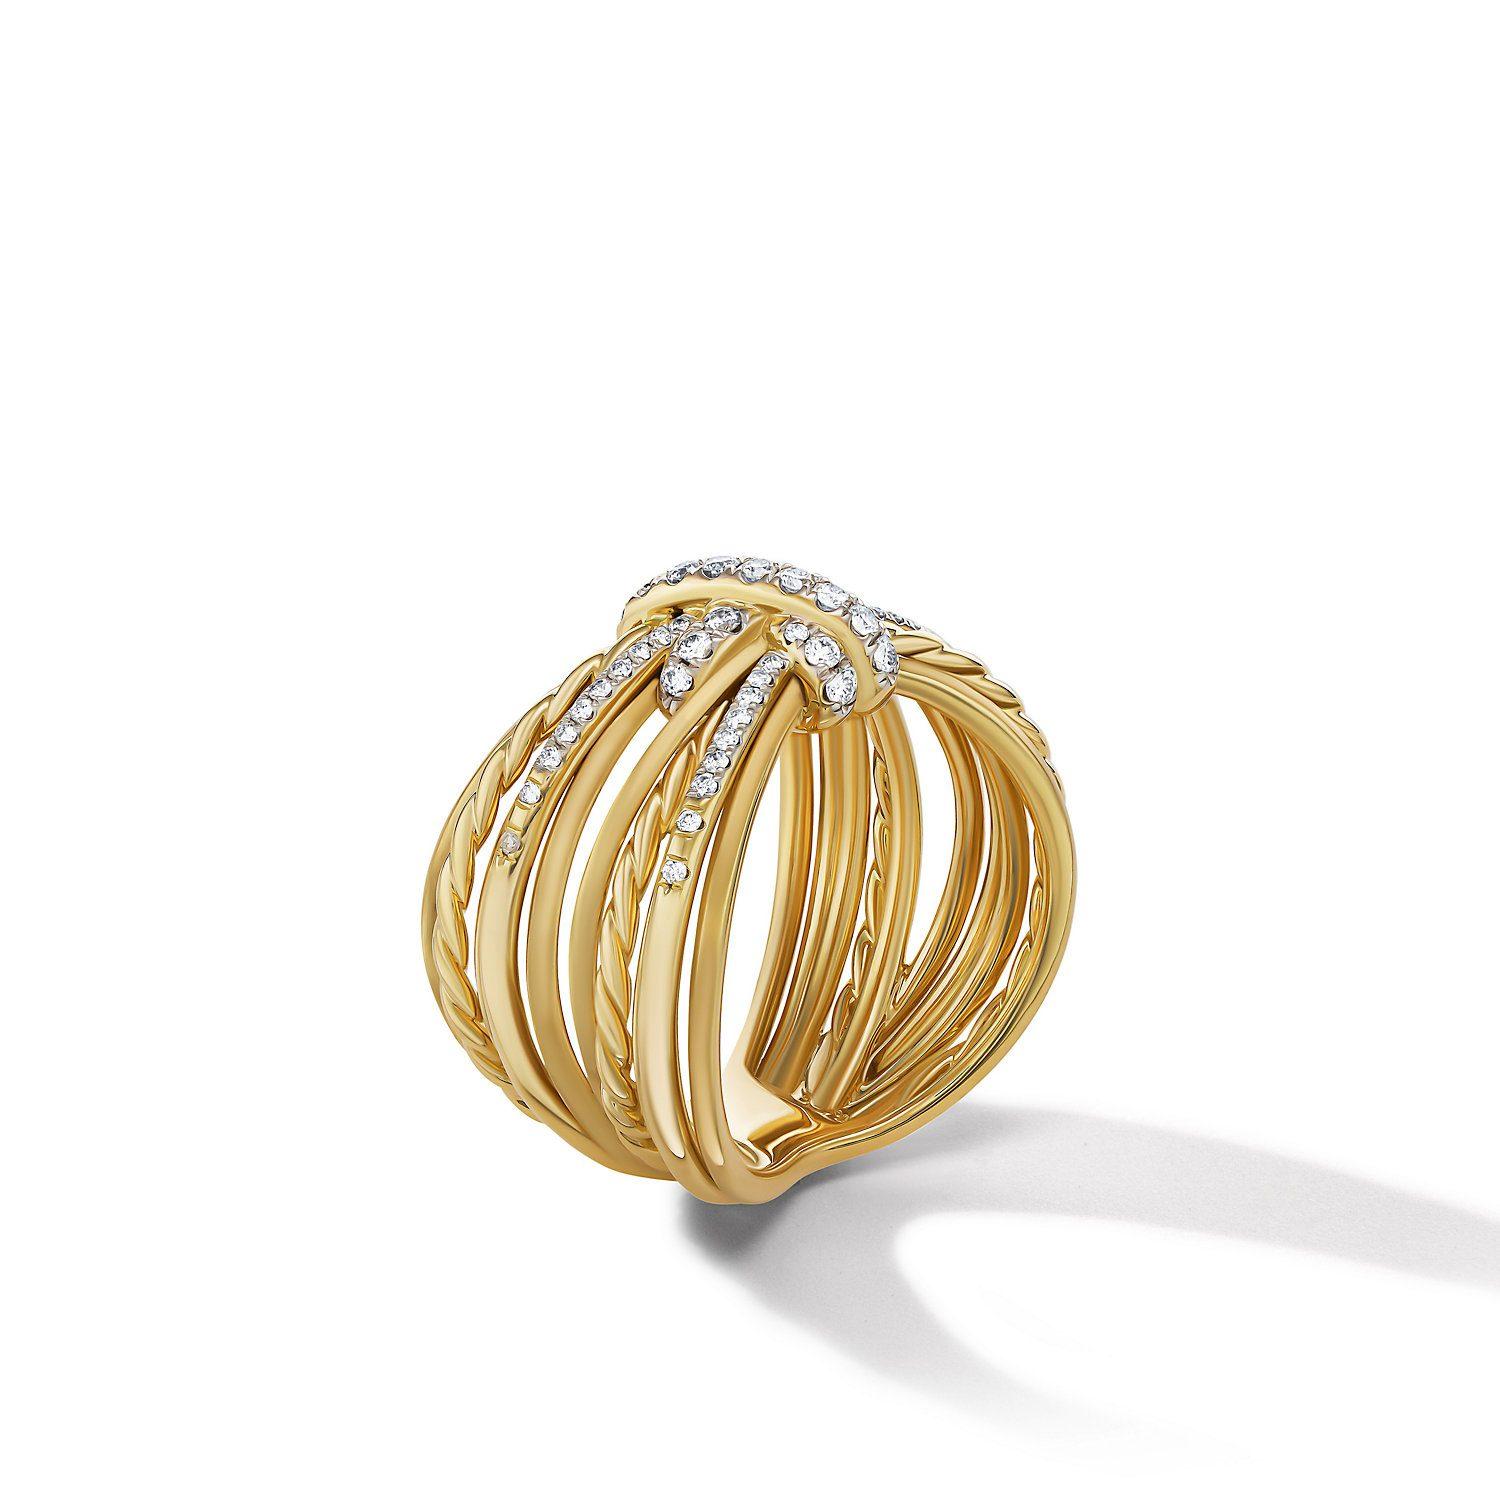 David Yurman Angelika Maltese Ring in 18K Yellow Gold with Pave Diamonds 2